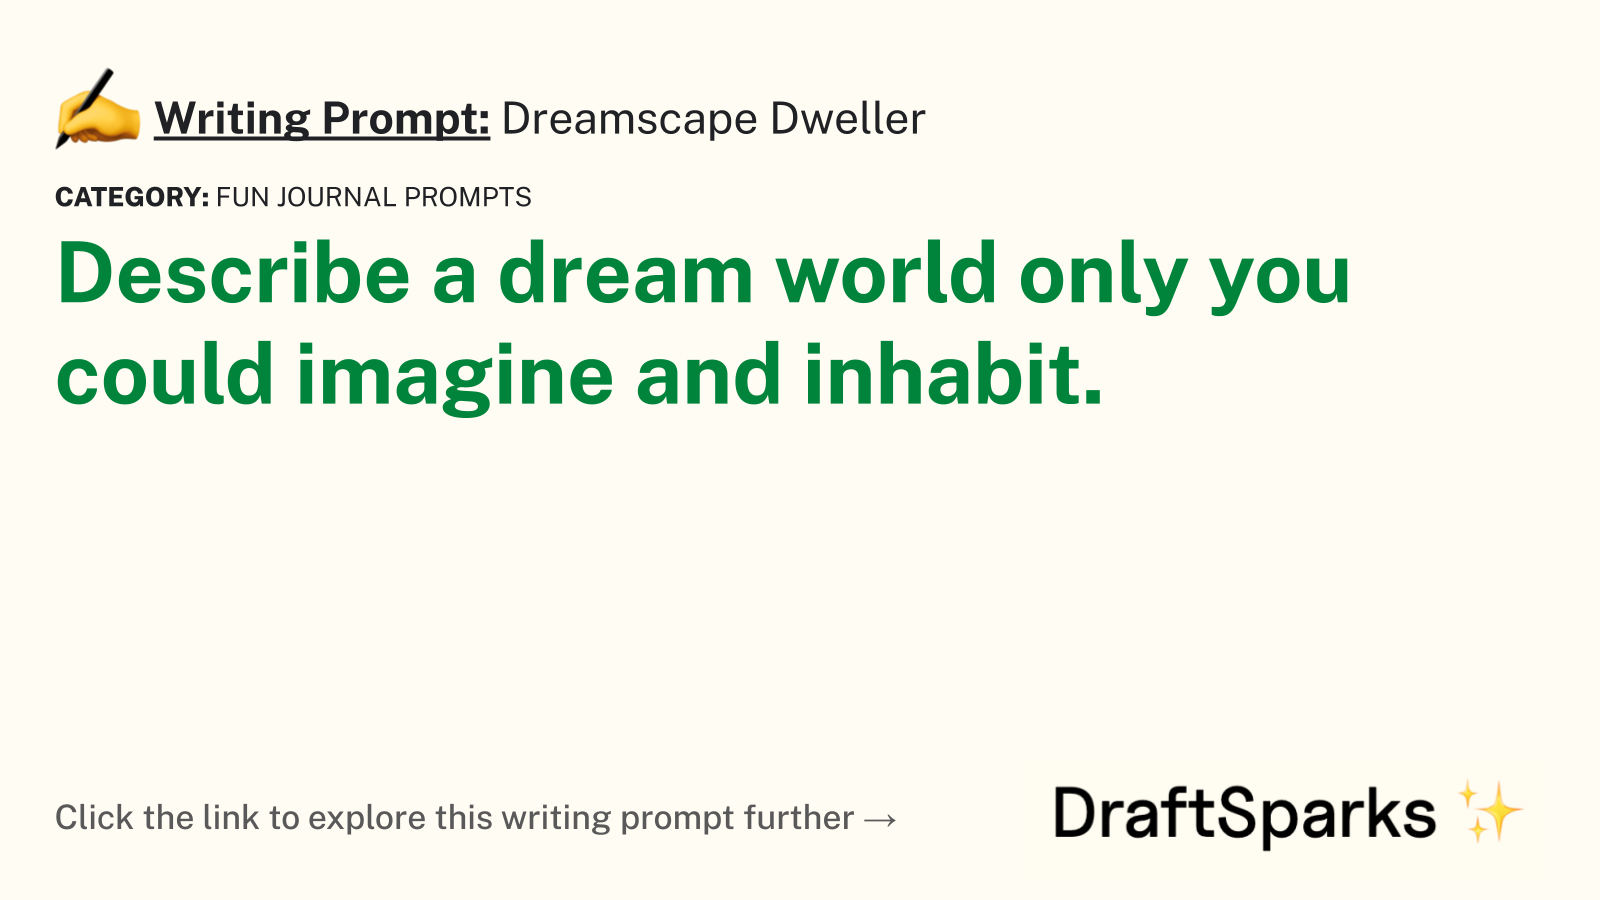 Dreamscape Dweller